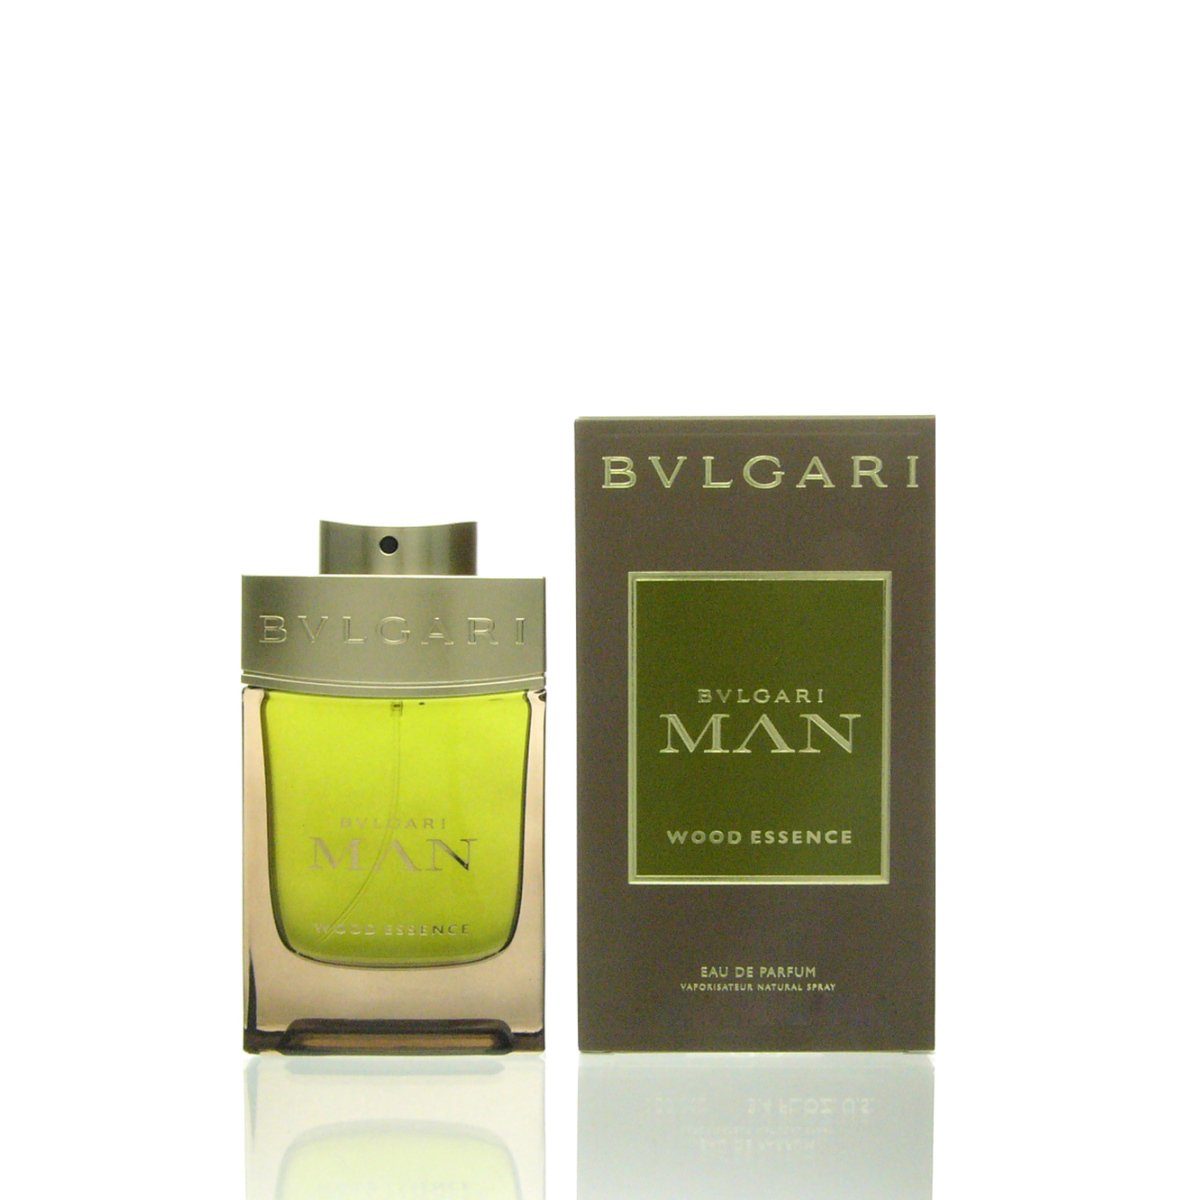 BVLGARI Eau de Parfum Bvlgari Man Wood Essence Eau de Parfum 60 ml